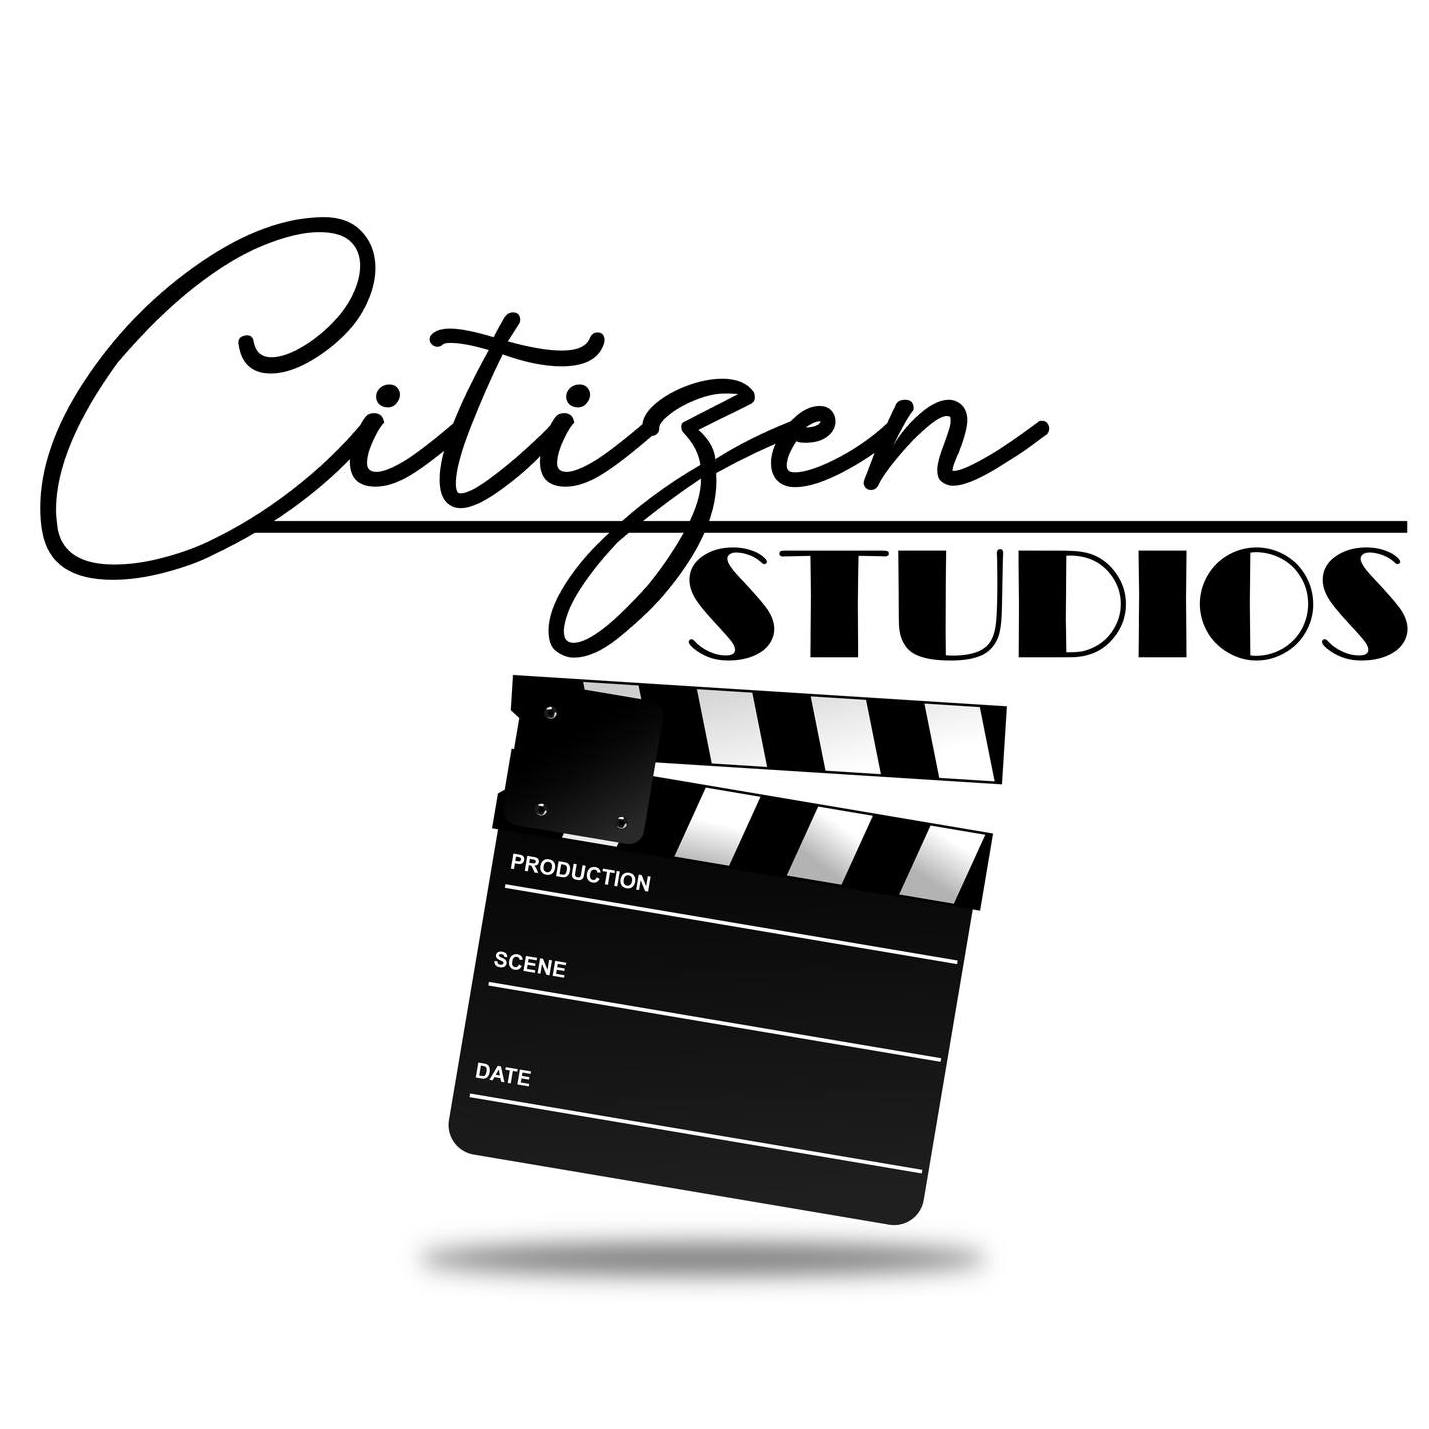 Citizen Studios